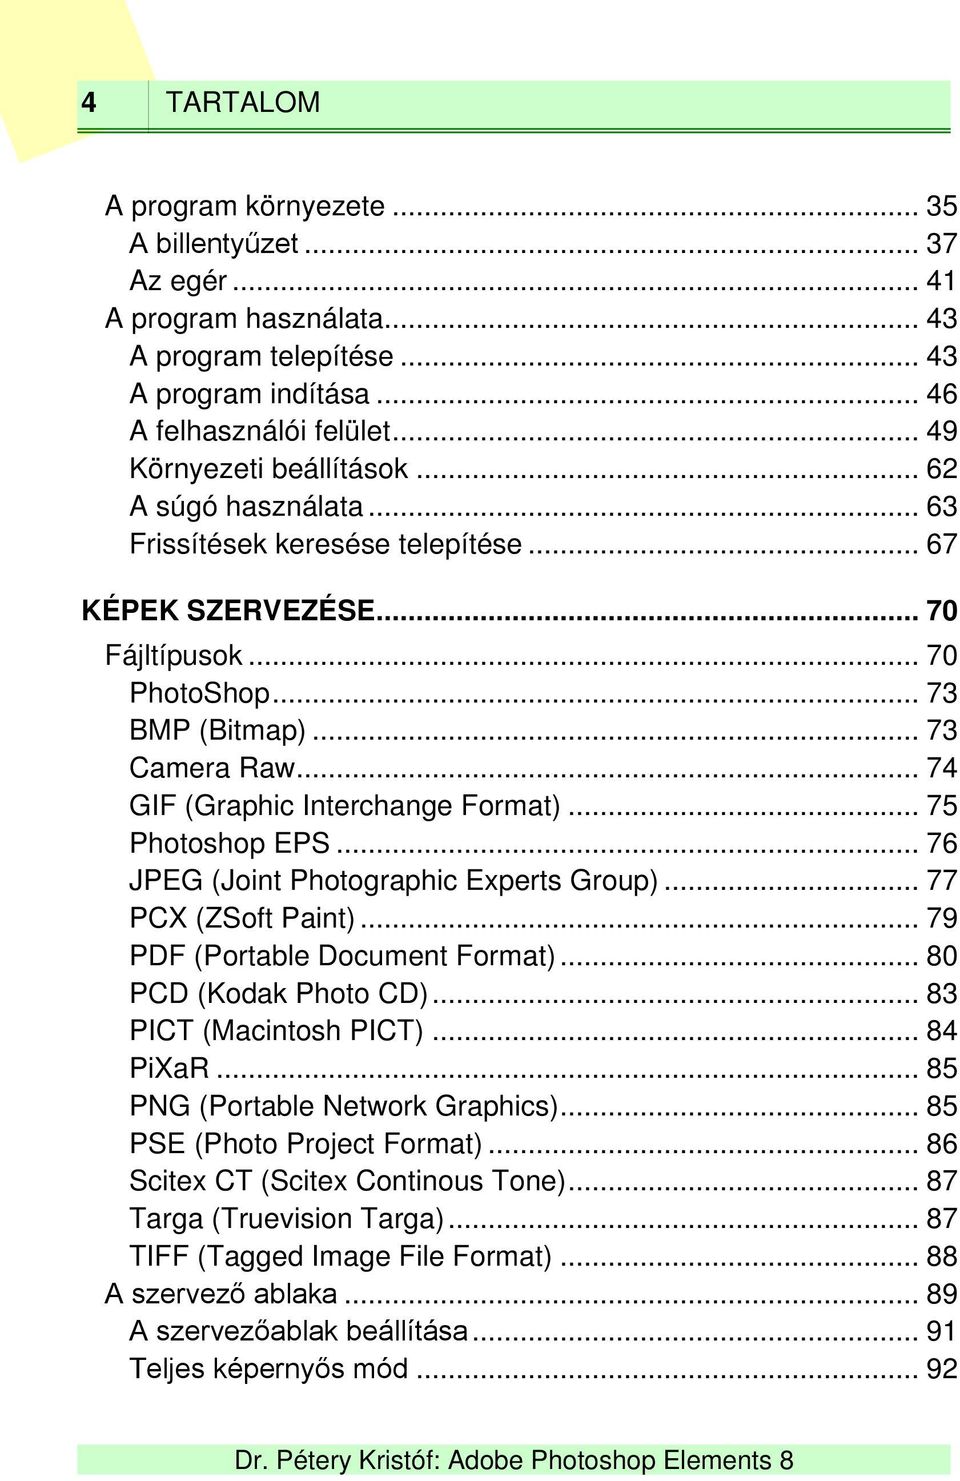 .. 74 GIF (Graphic Interchange Format)... 75 Photoshop EPS... 76 JPEG (Joint Photographic Experts Group)... 77 PCX (ZSoft Paint)... 79 PDF (Portable Document Format)... 80 PCD (Kodak Photo CD).